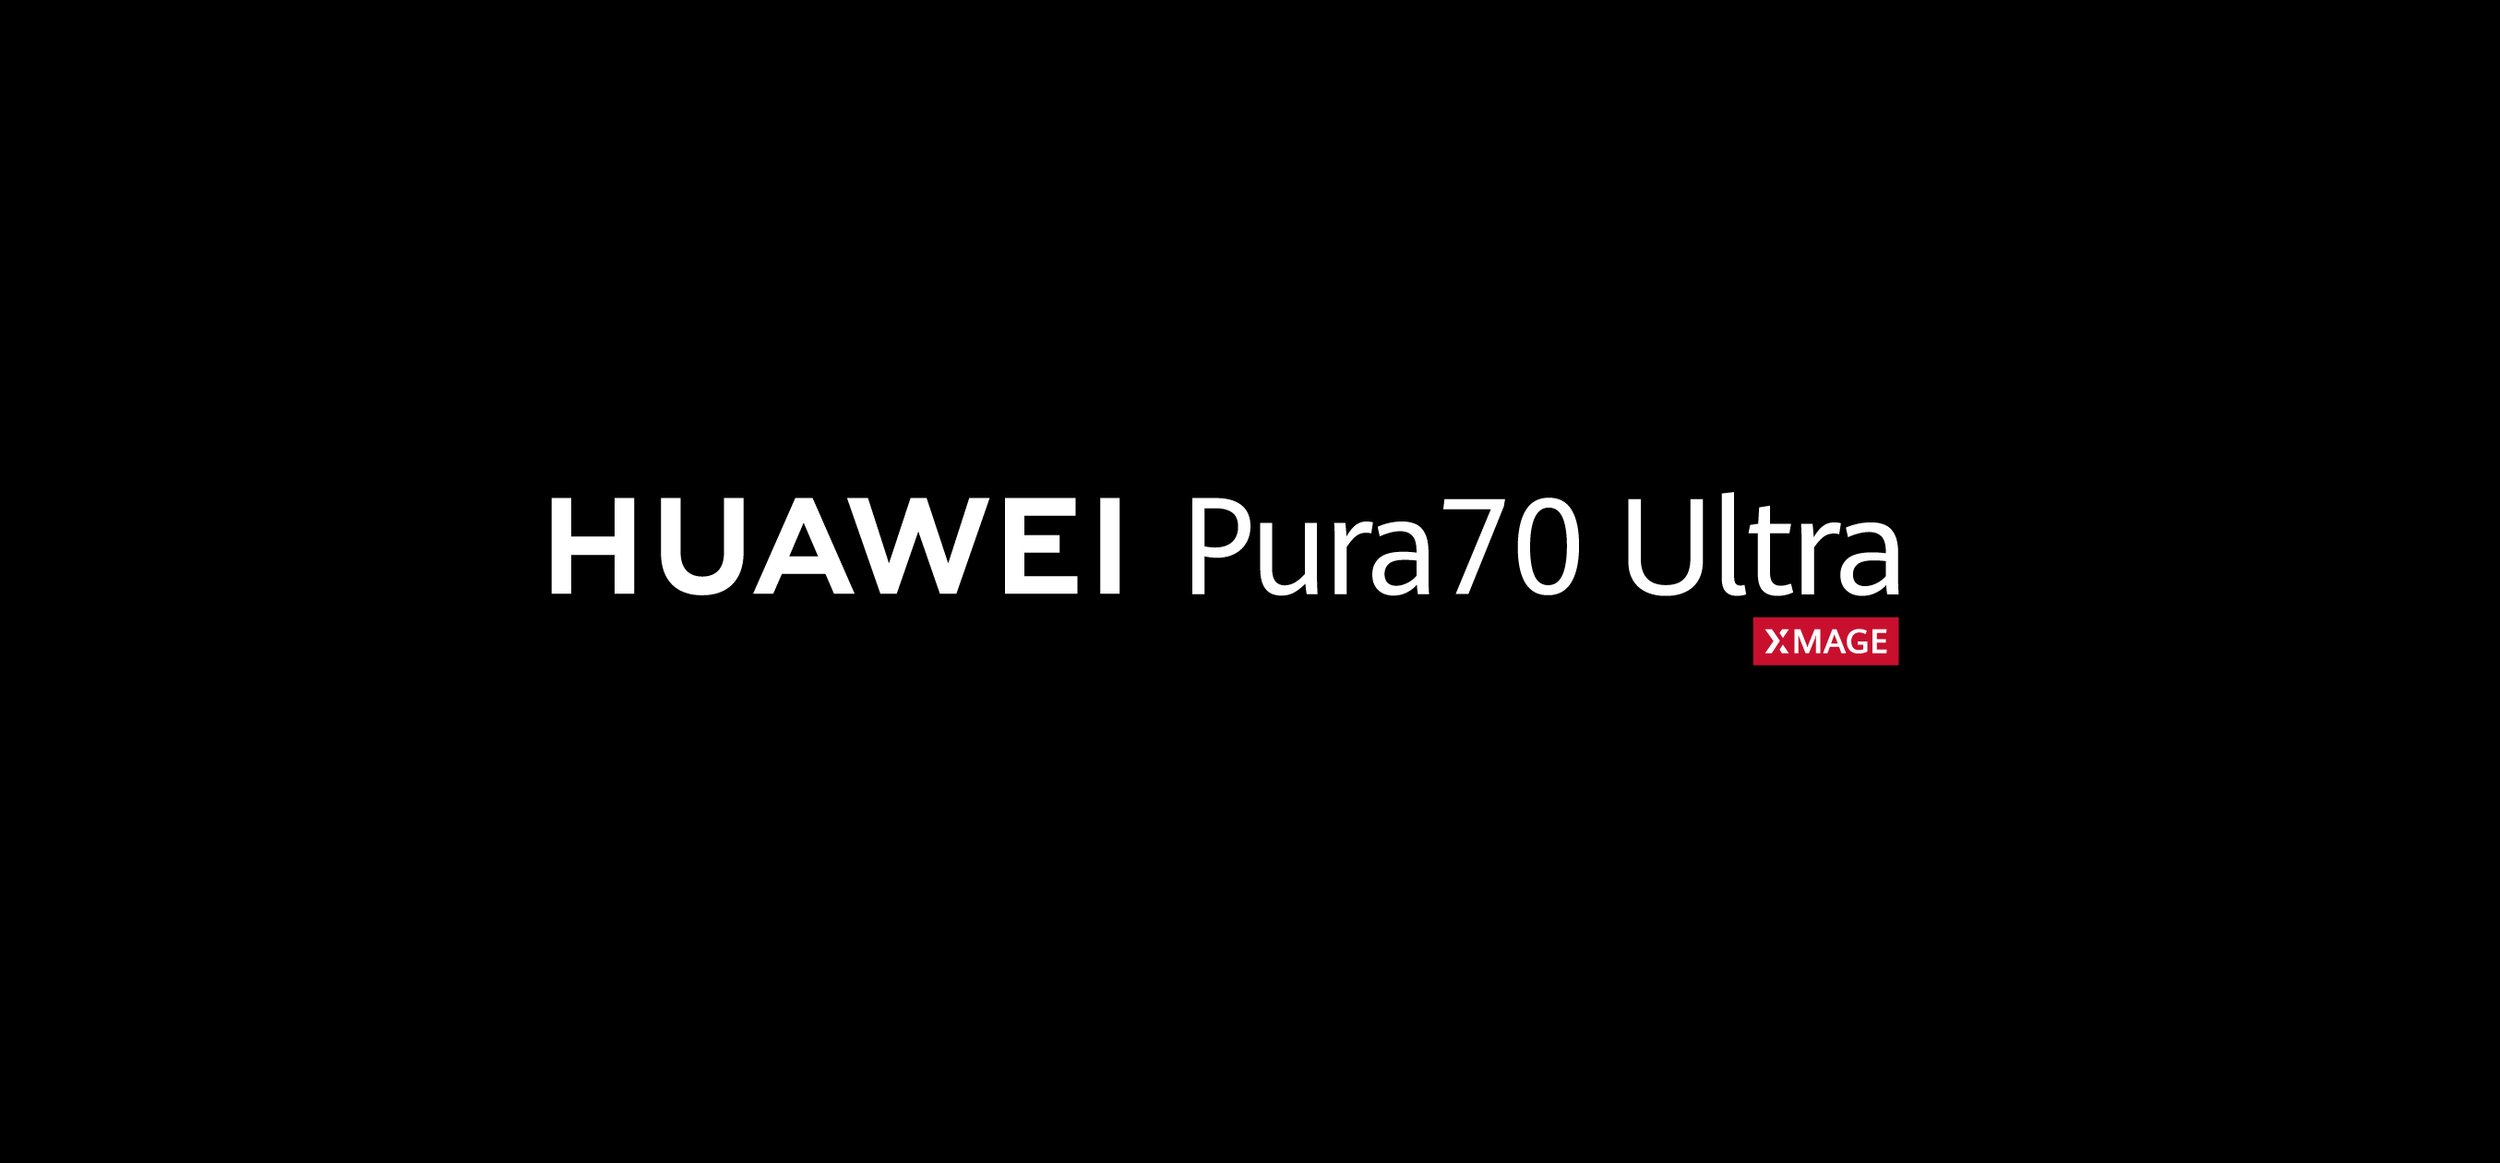 HUAWEI - Pura 70 Ultra.jpg